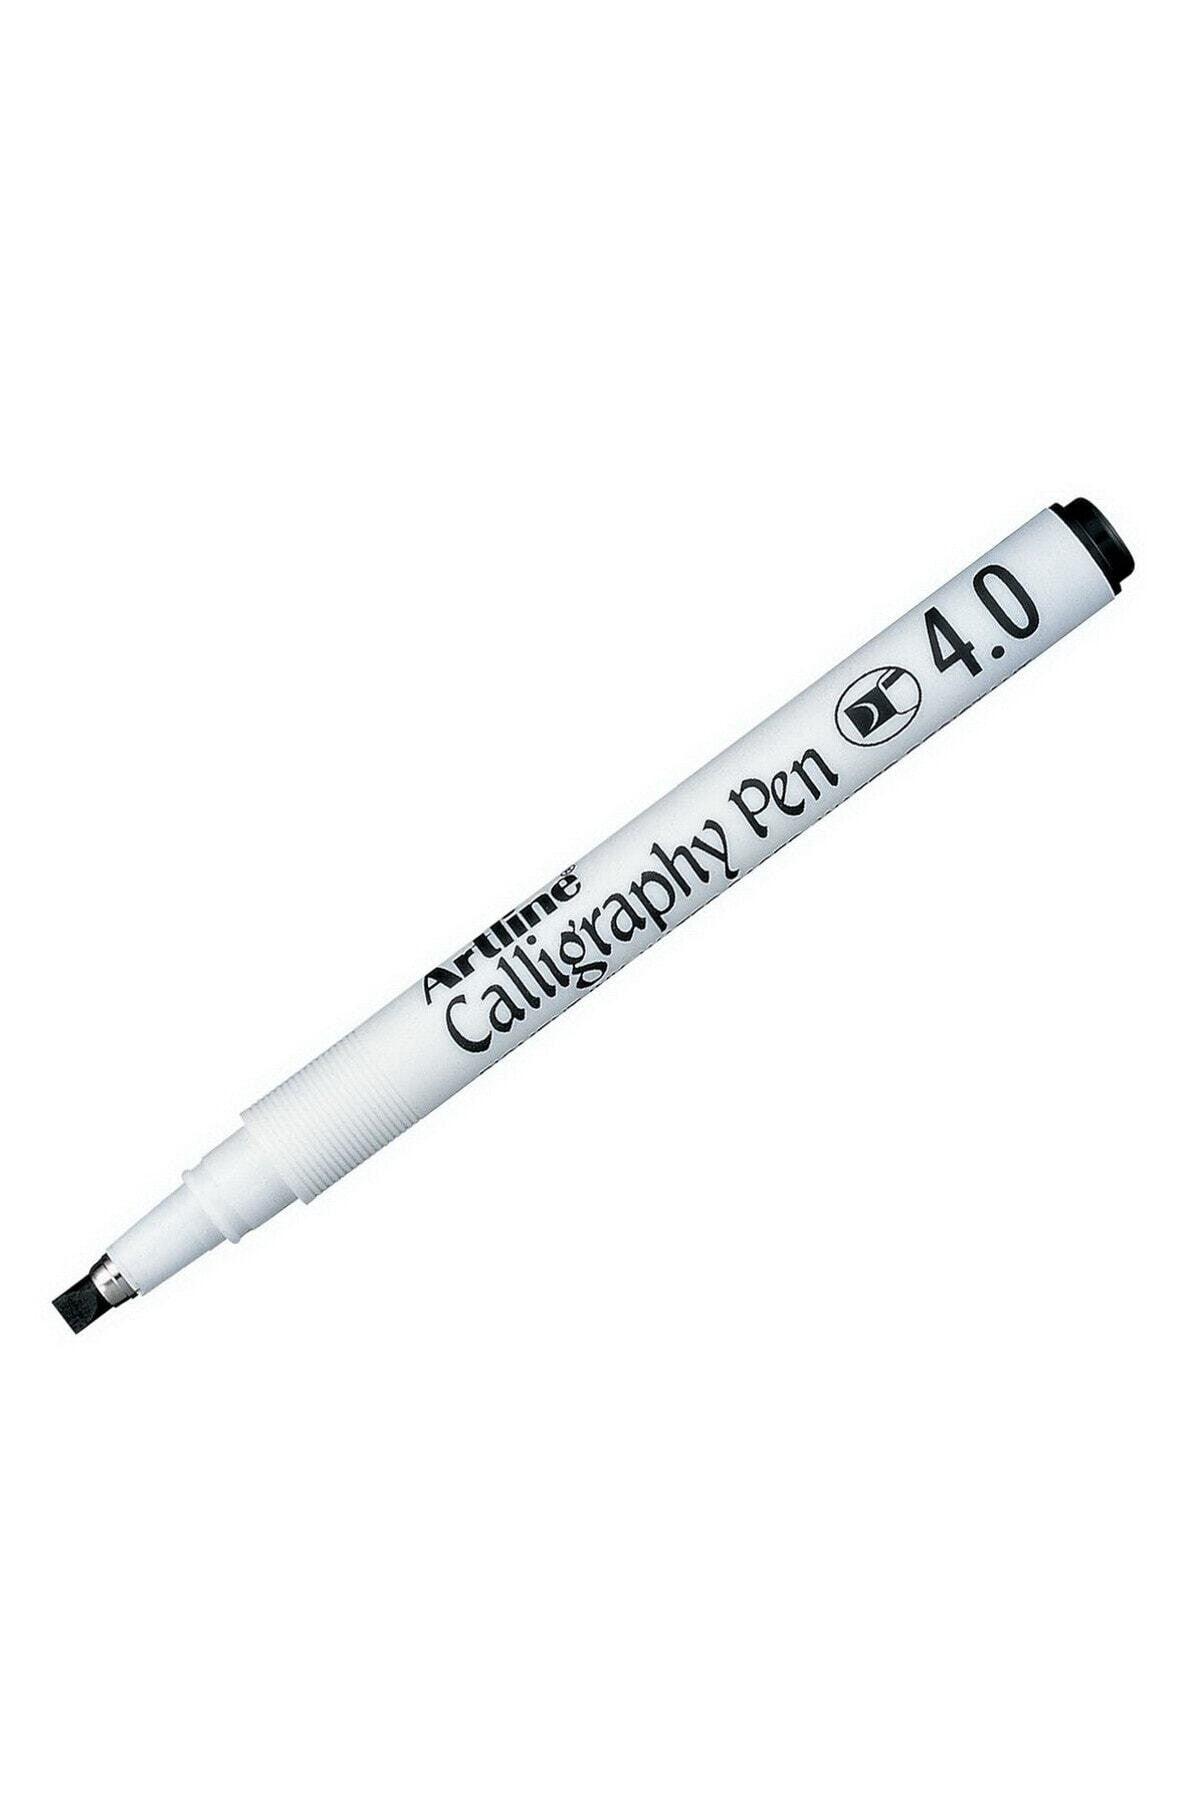 Calligraphy Pen 4.0 Calligraphy Pen Nib:4.0mm